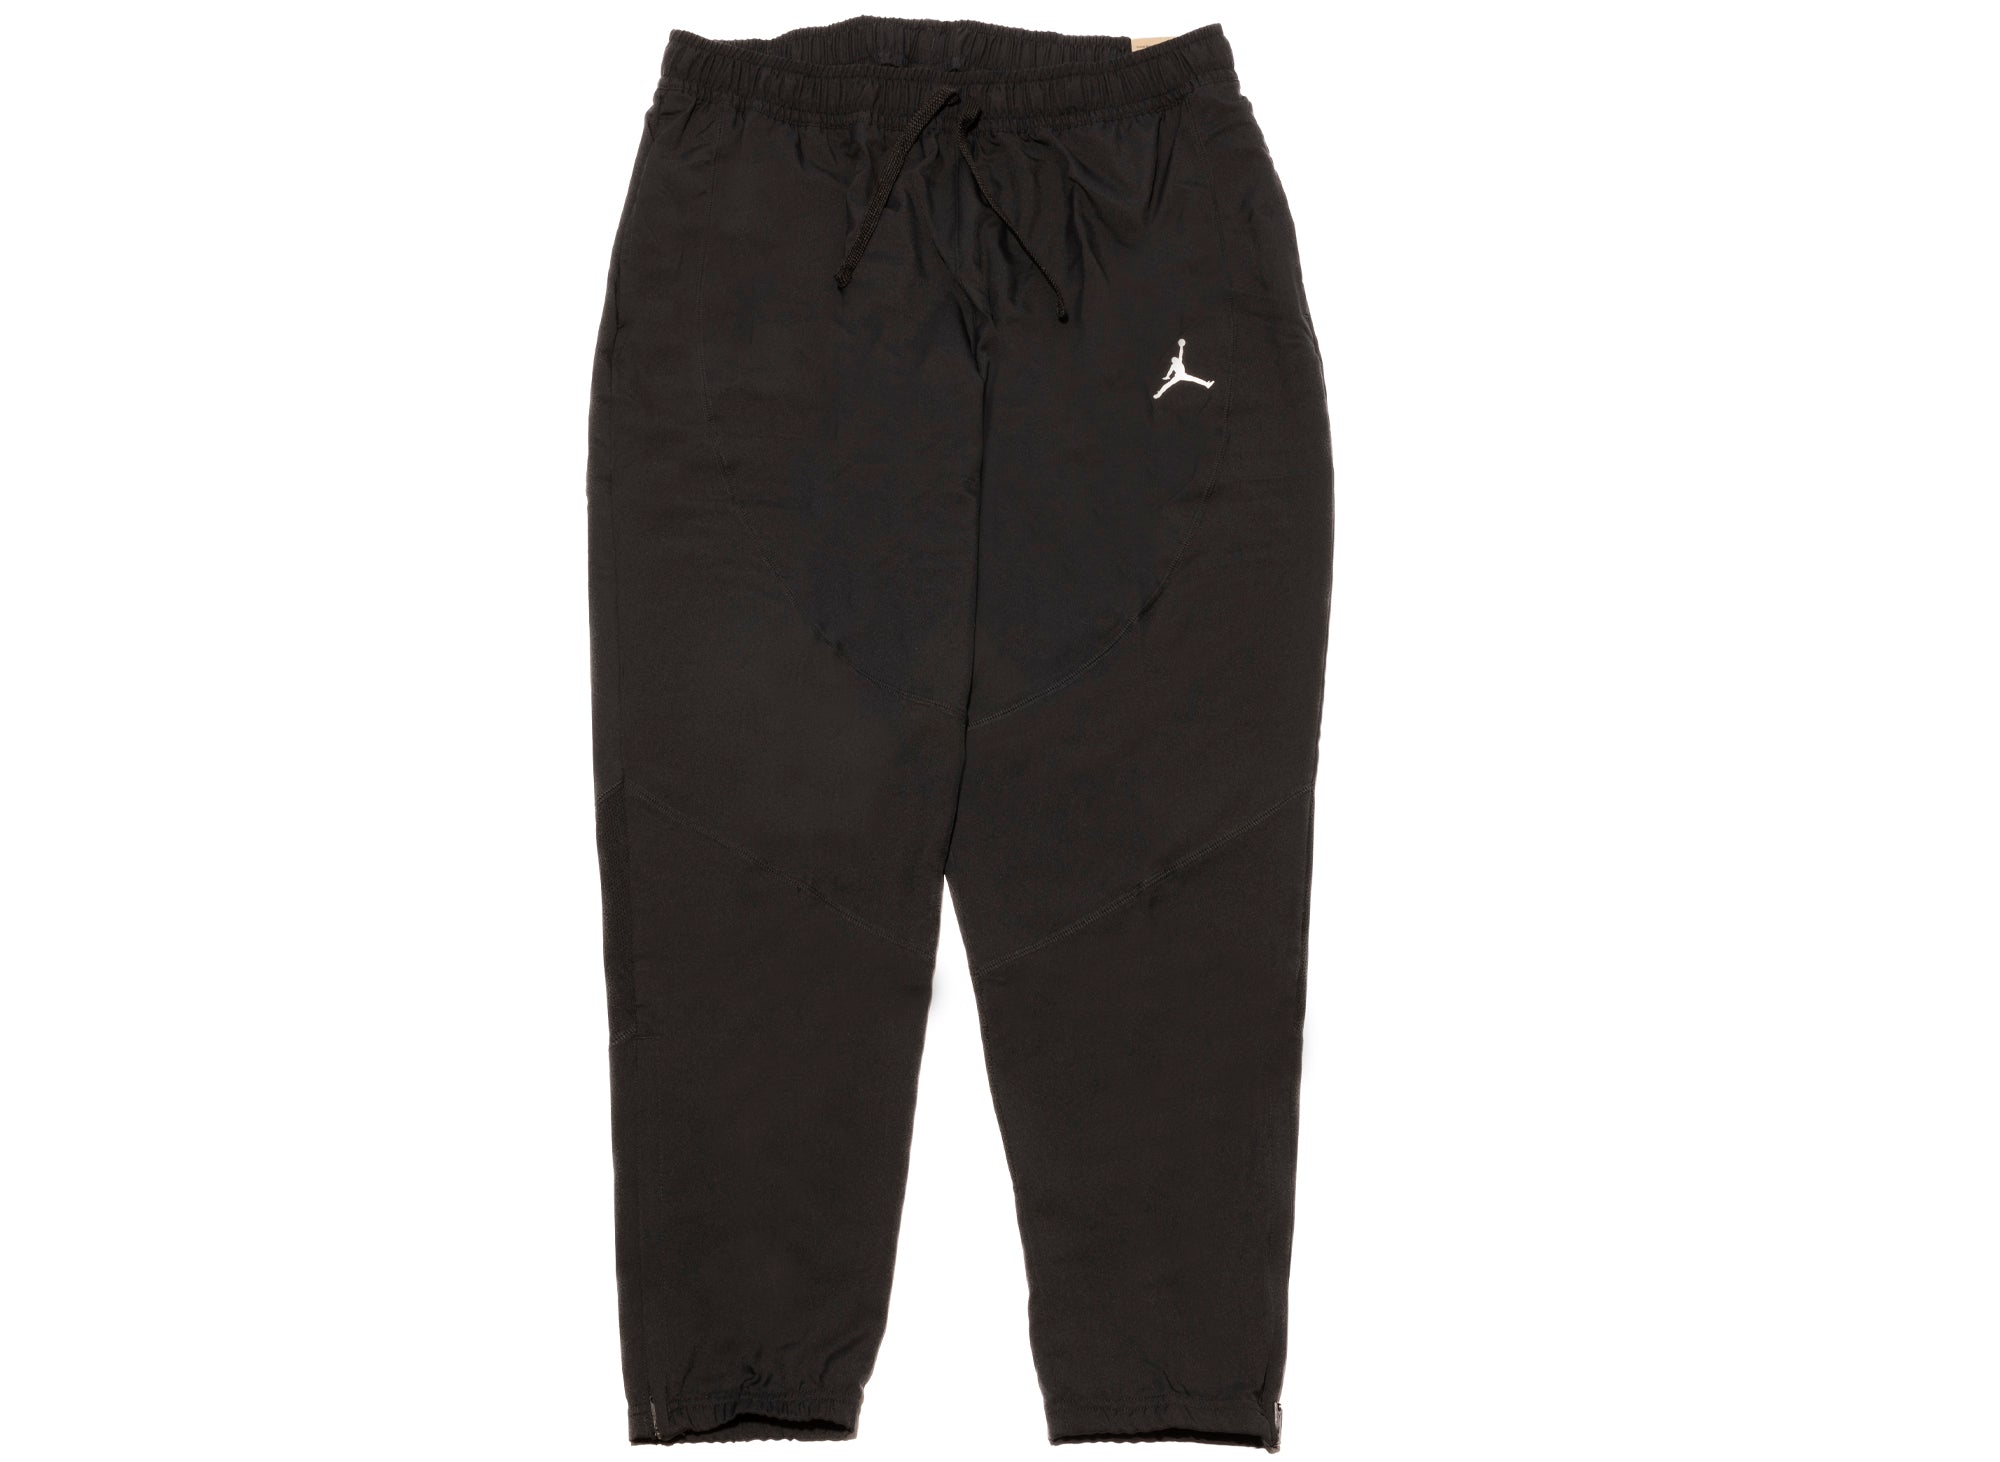  Jordan Boys Youth Jumpman Fleece Jogger Sweat Pants